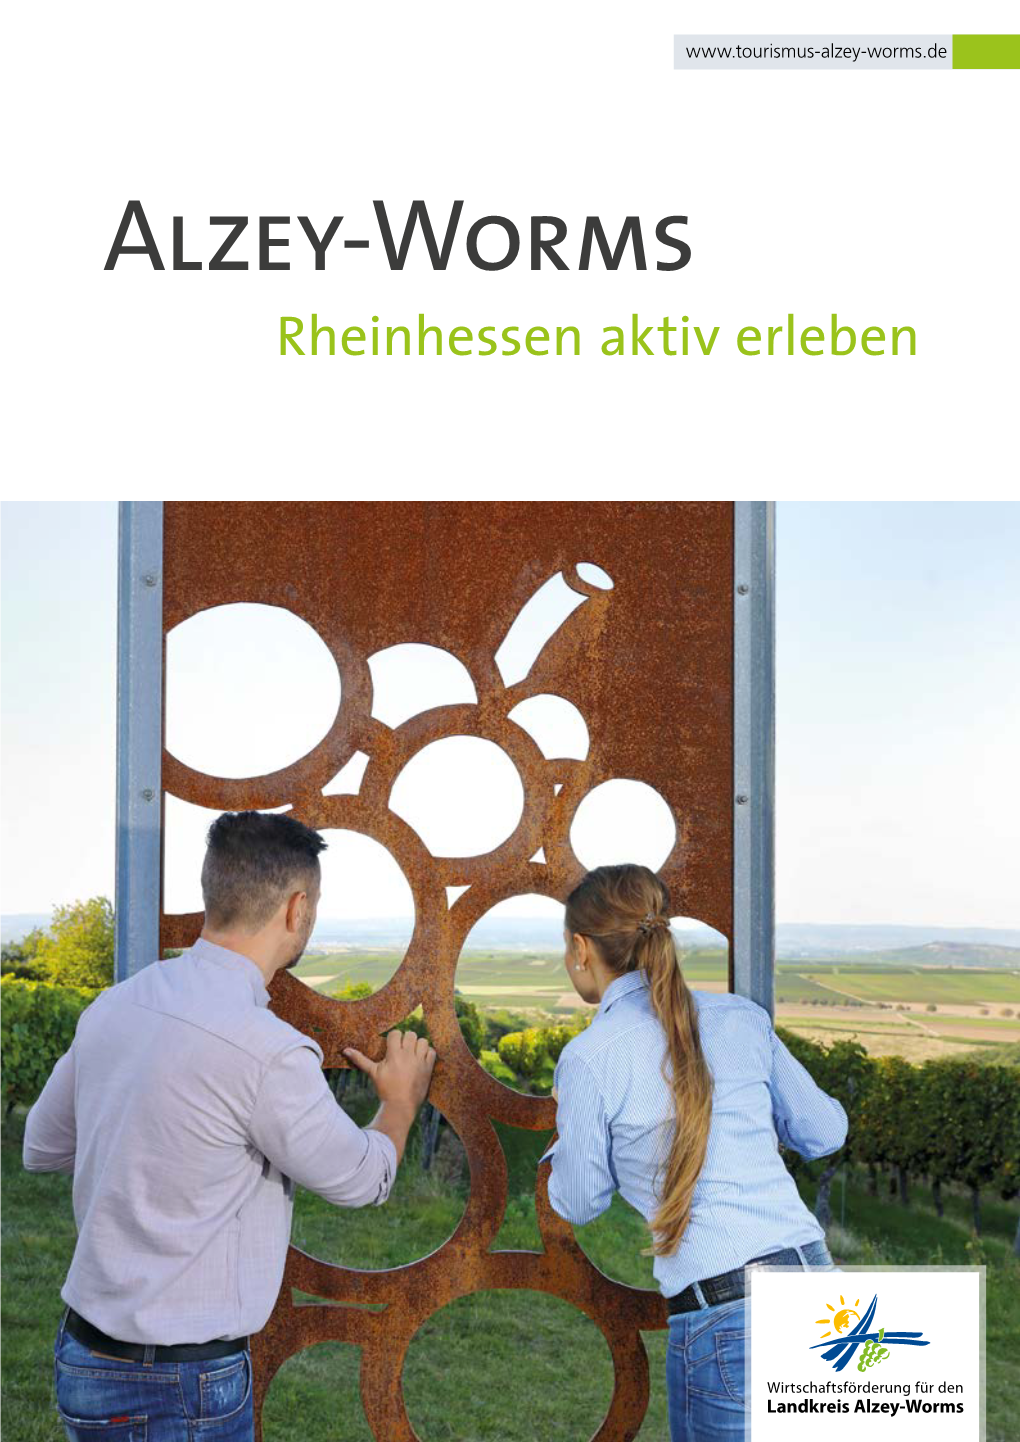 Tourismus Alzey-Worms